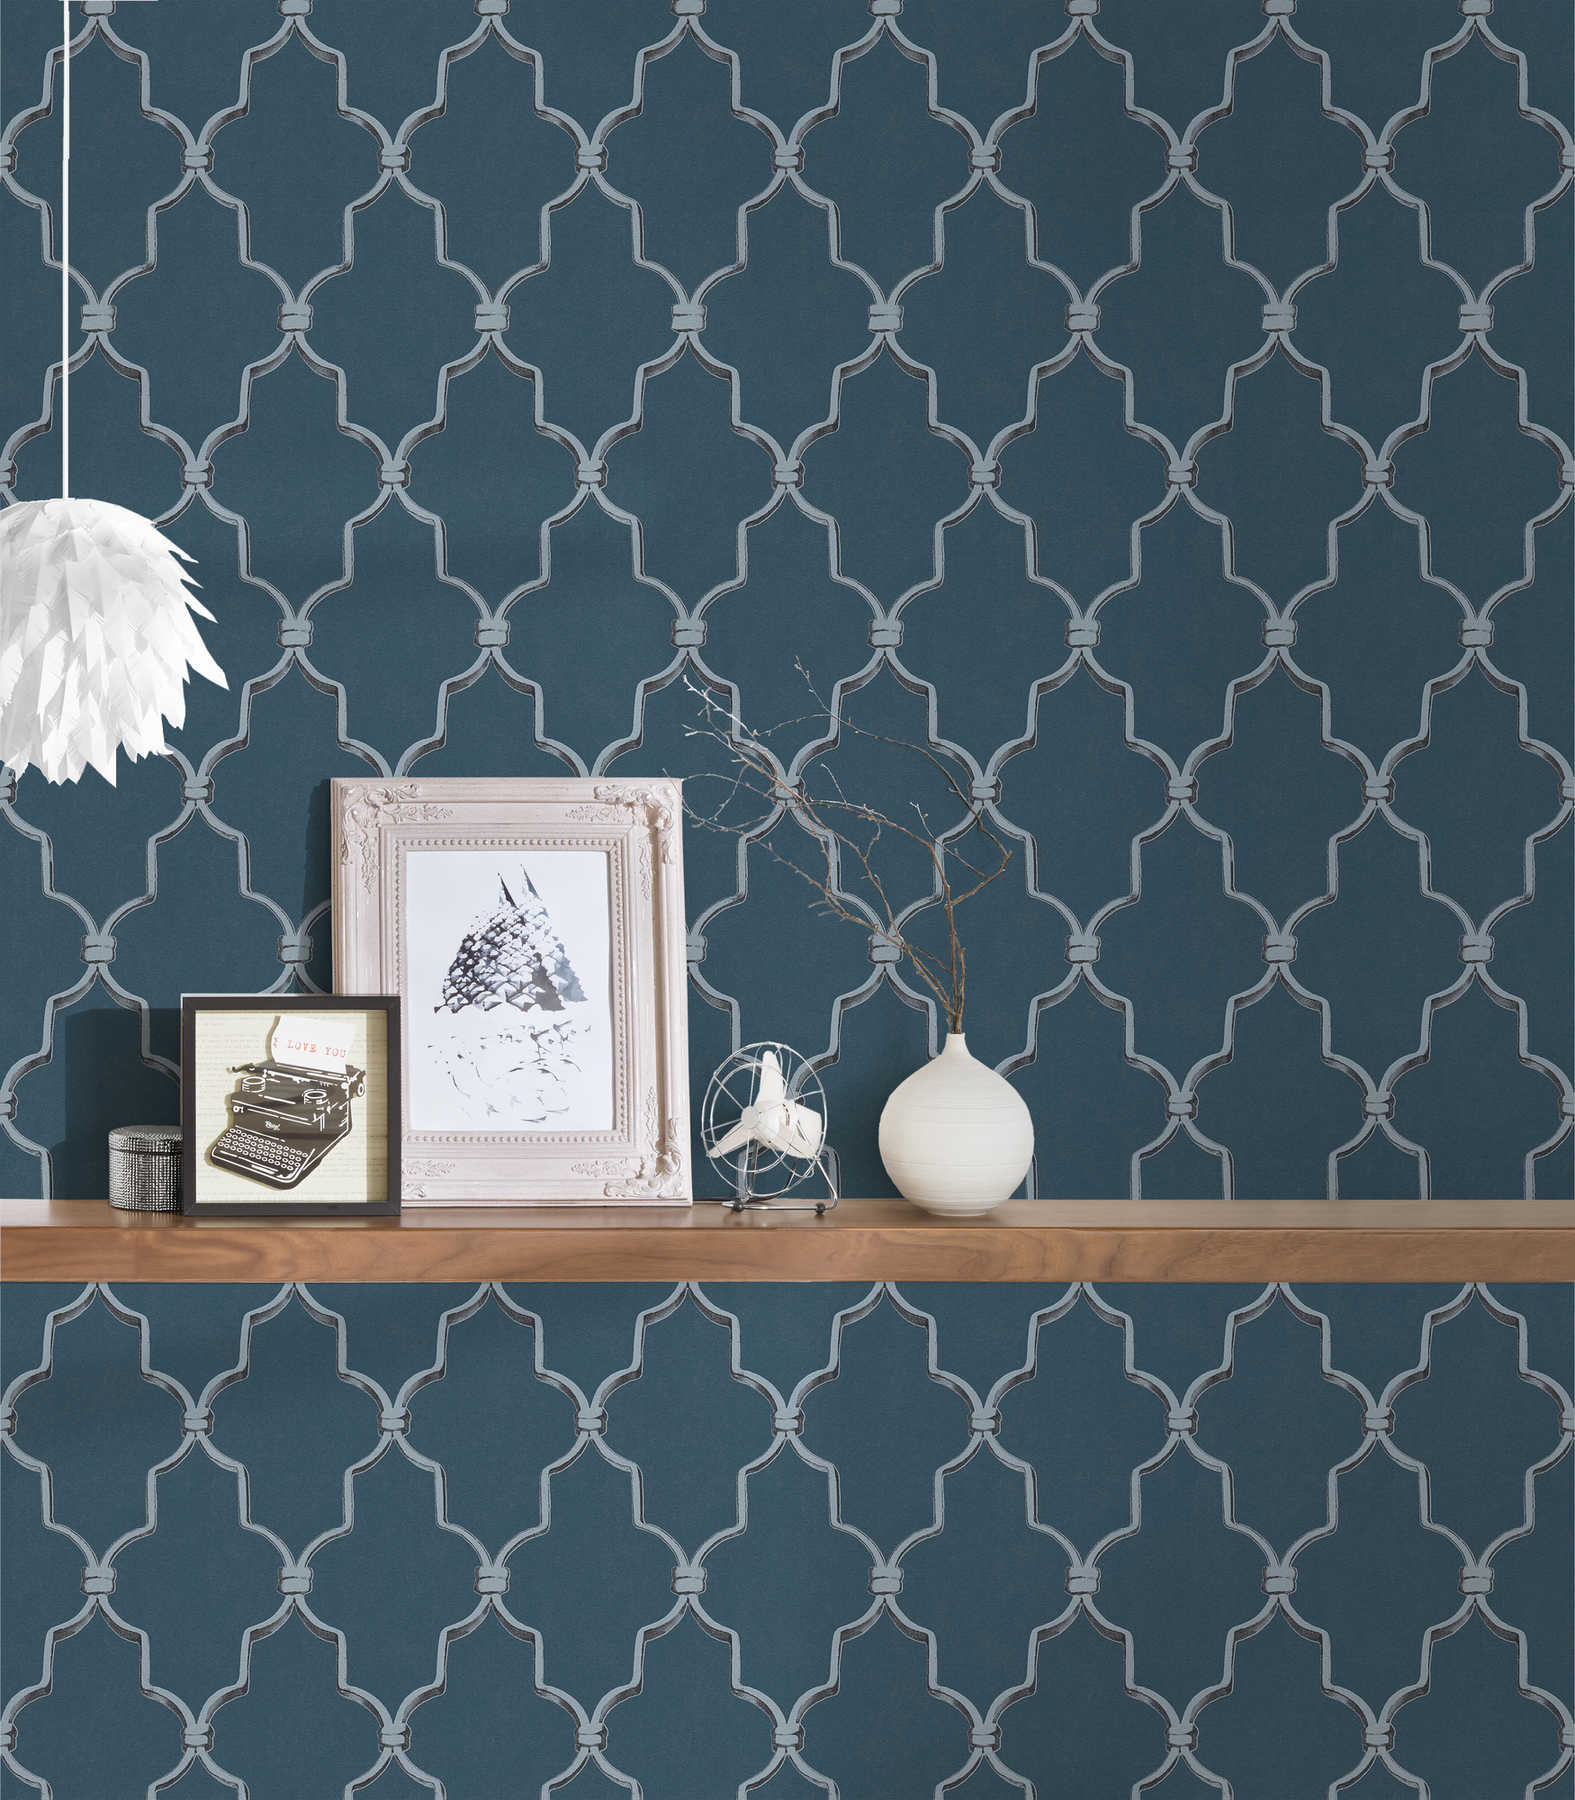             Art Deco wallpaper 3D pattern & metallic effect - blue, grey
        